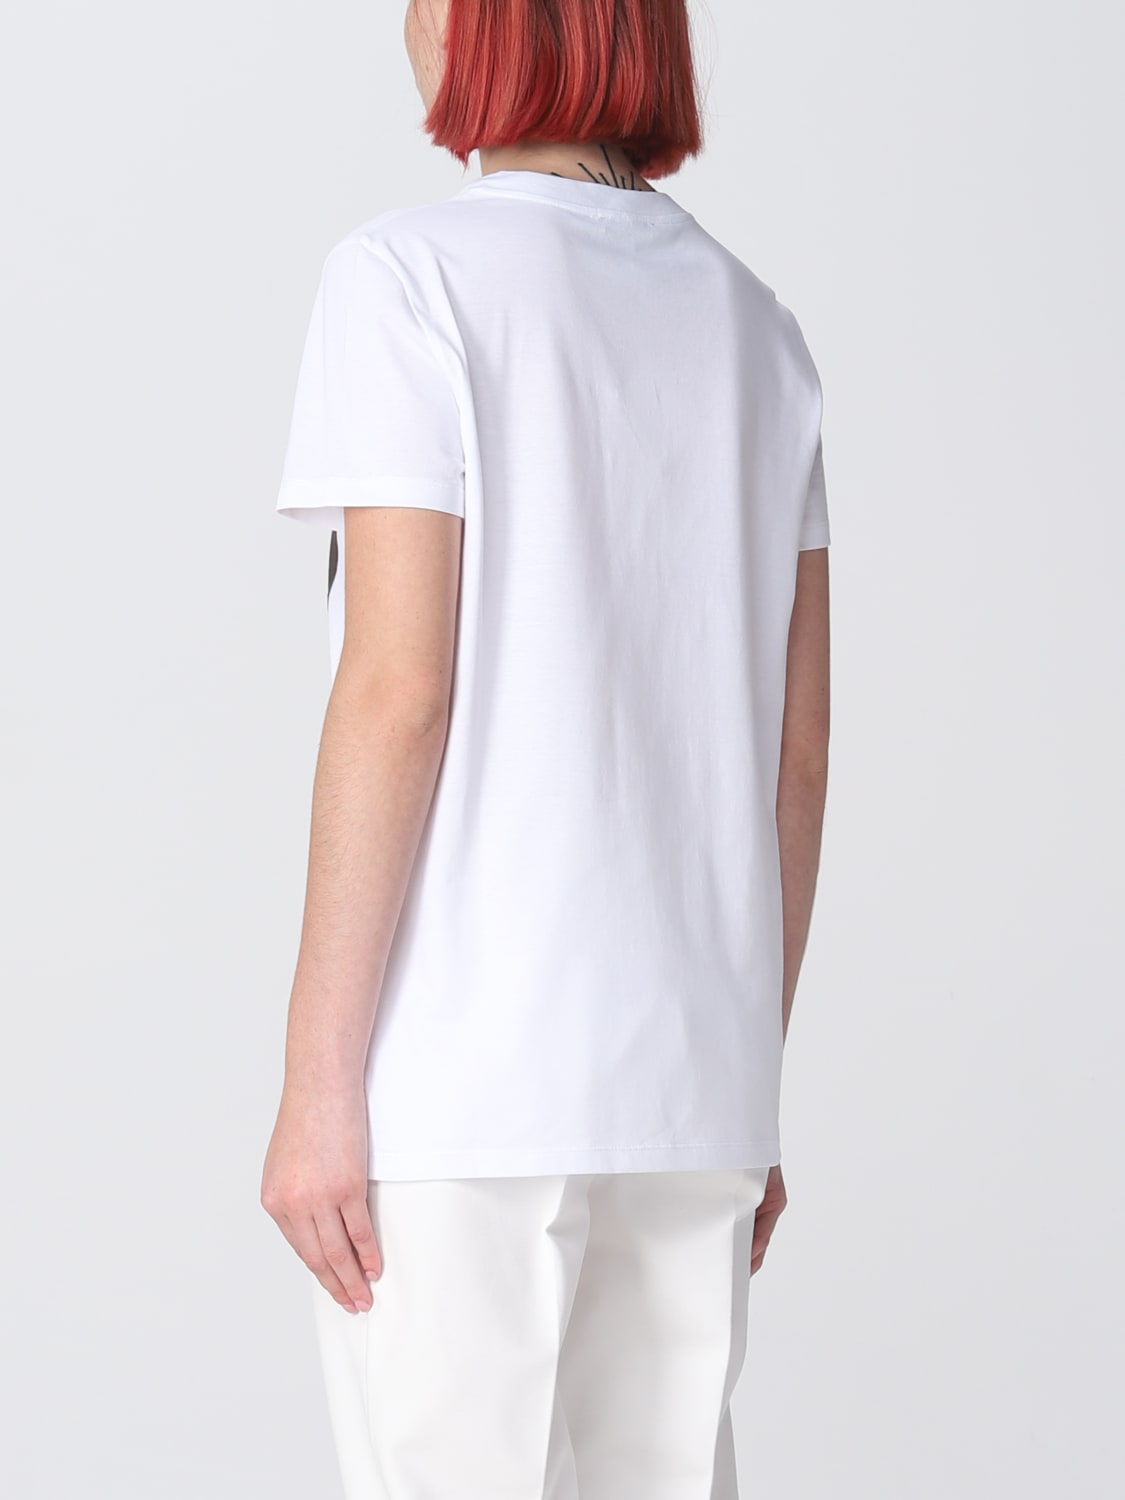 MAX MARA: cotton T-shirt - White | Max Mara t-shirt 2319460339600 ...